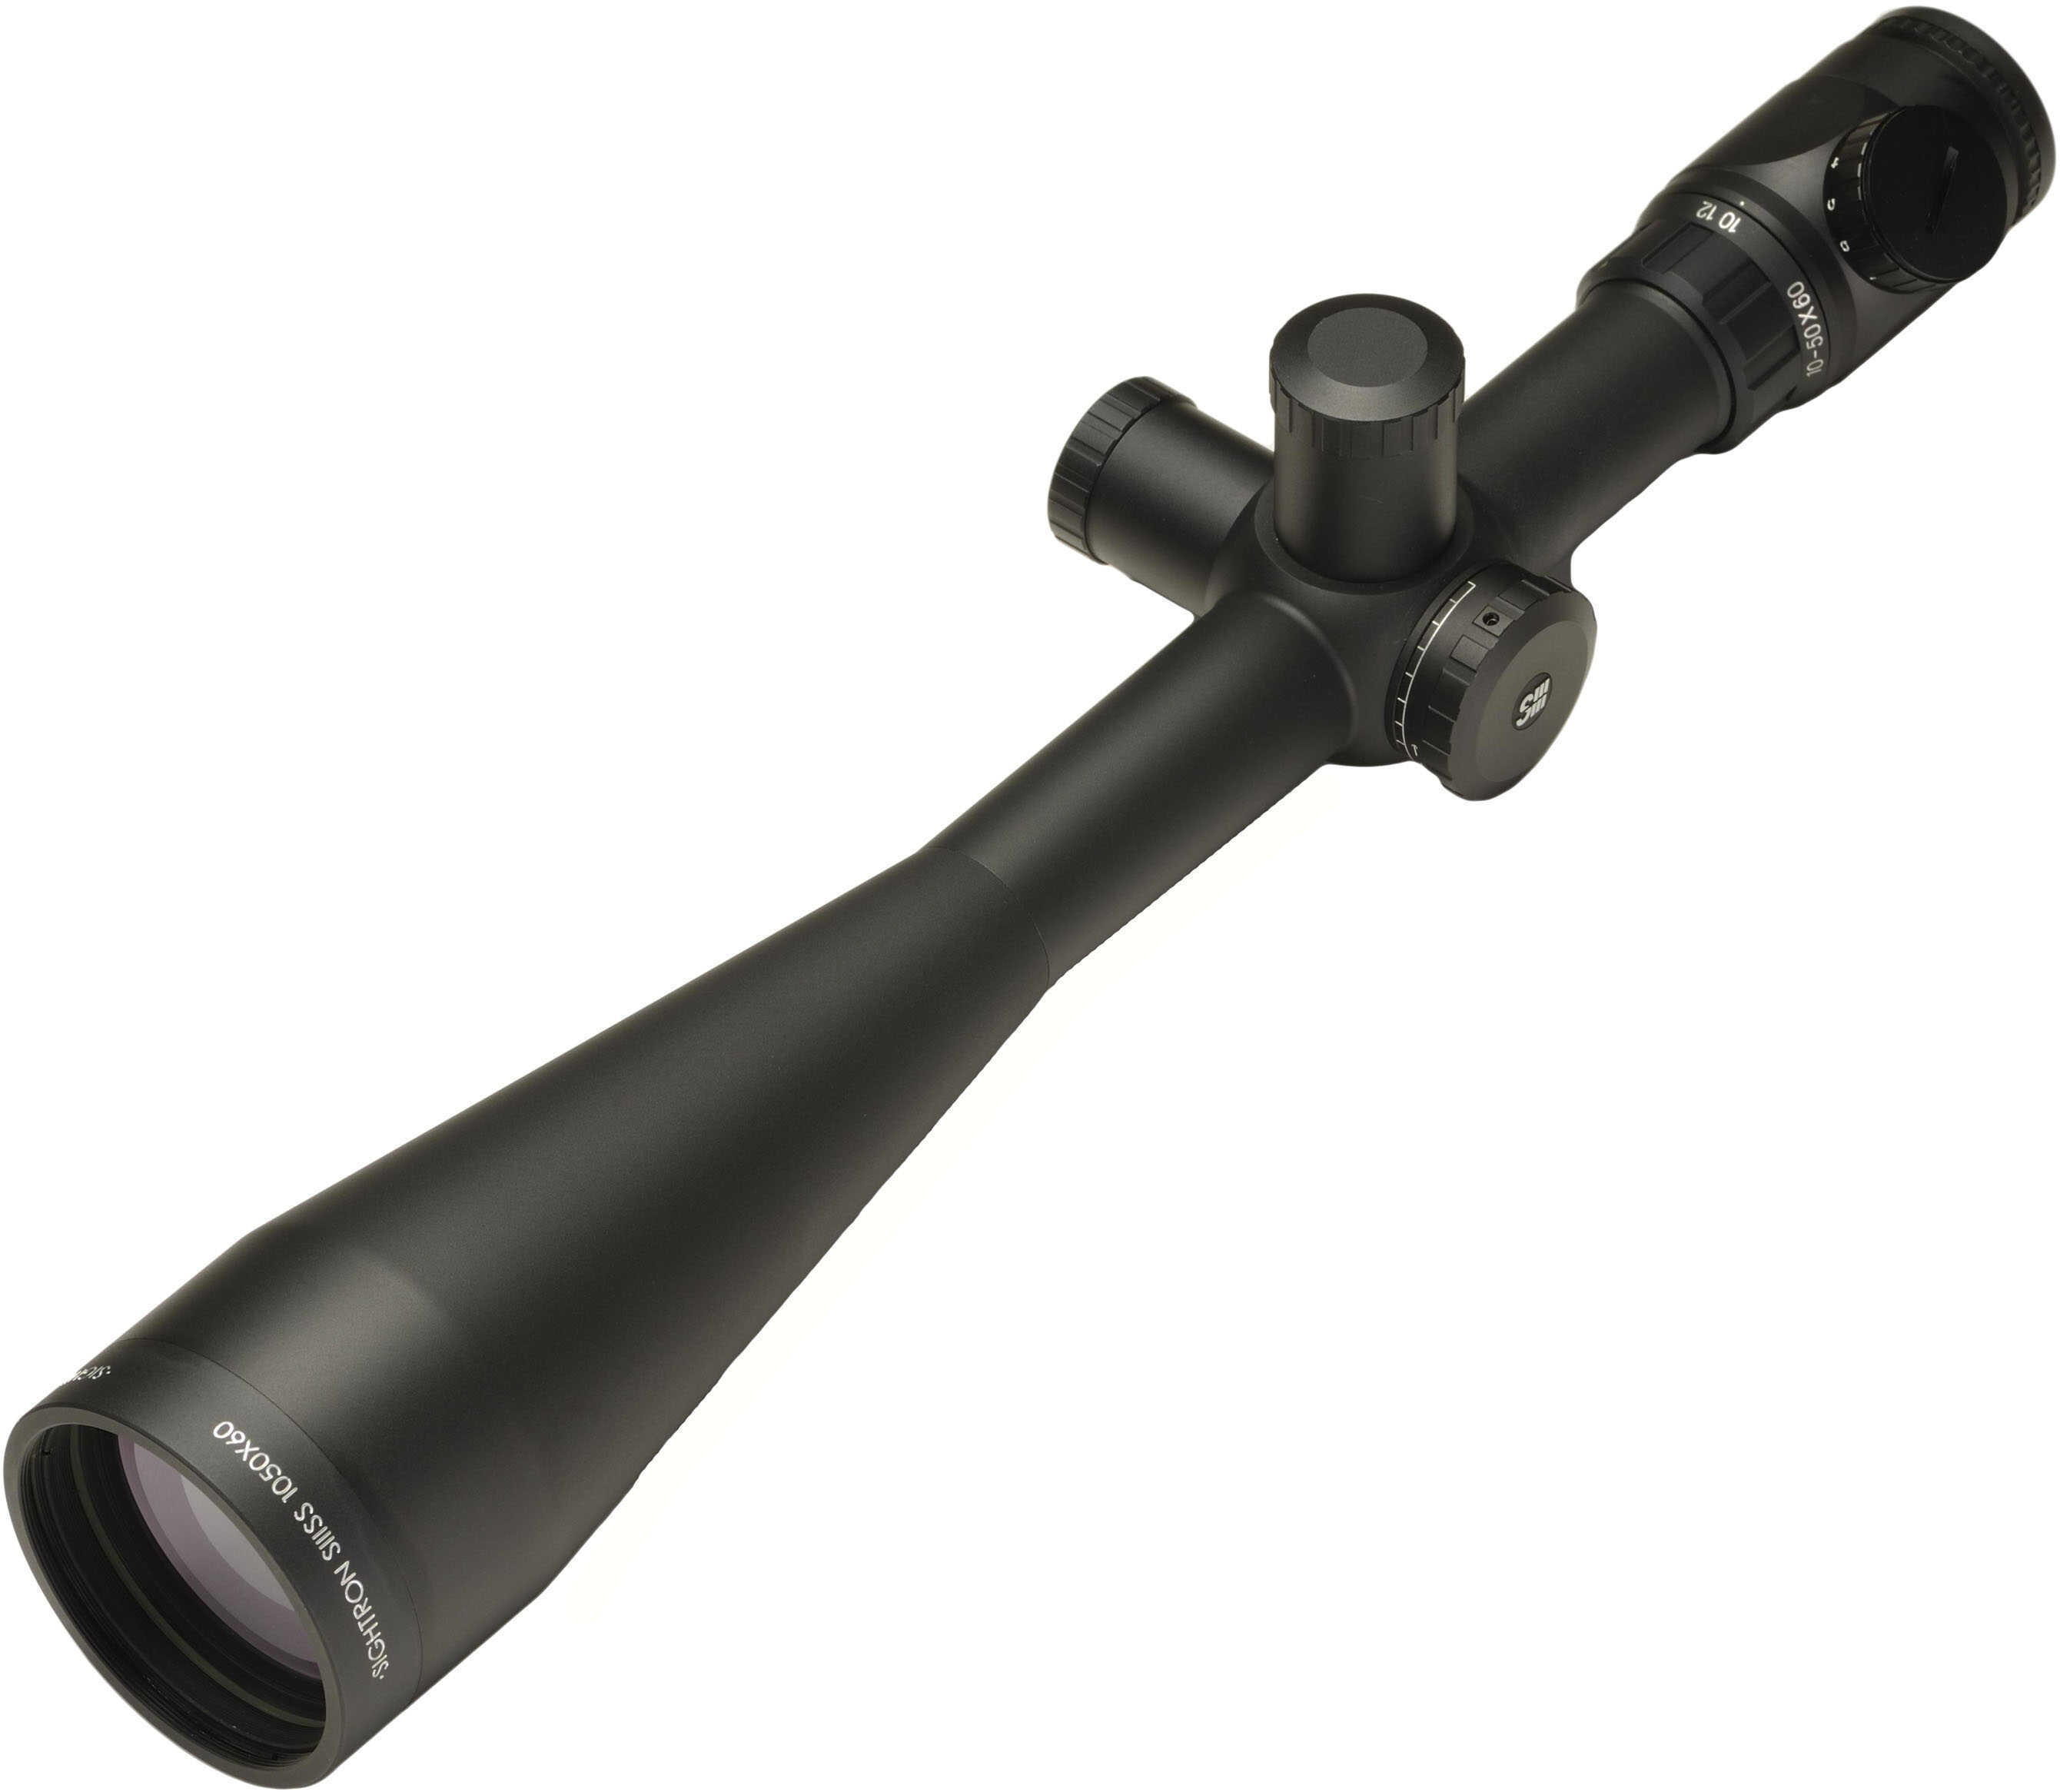 Sightron SIII 30mm Riflescope 10-50x60mm Illuminated OA-H Reticle, Matte Black Md: 25018